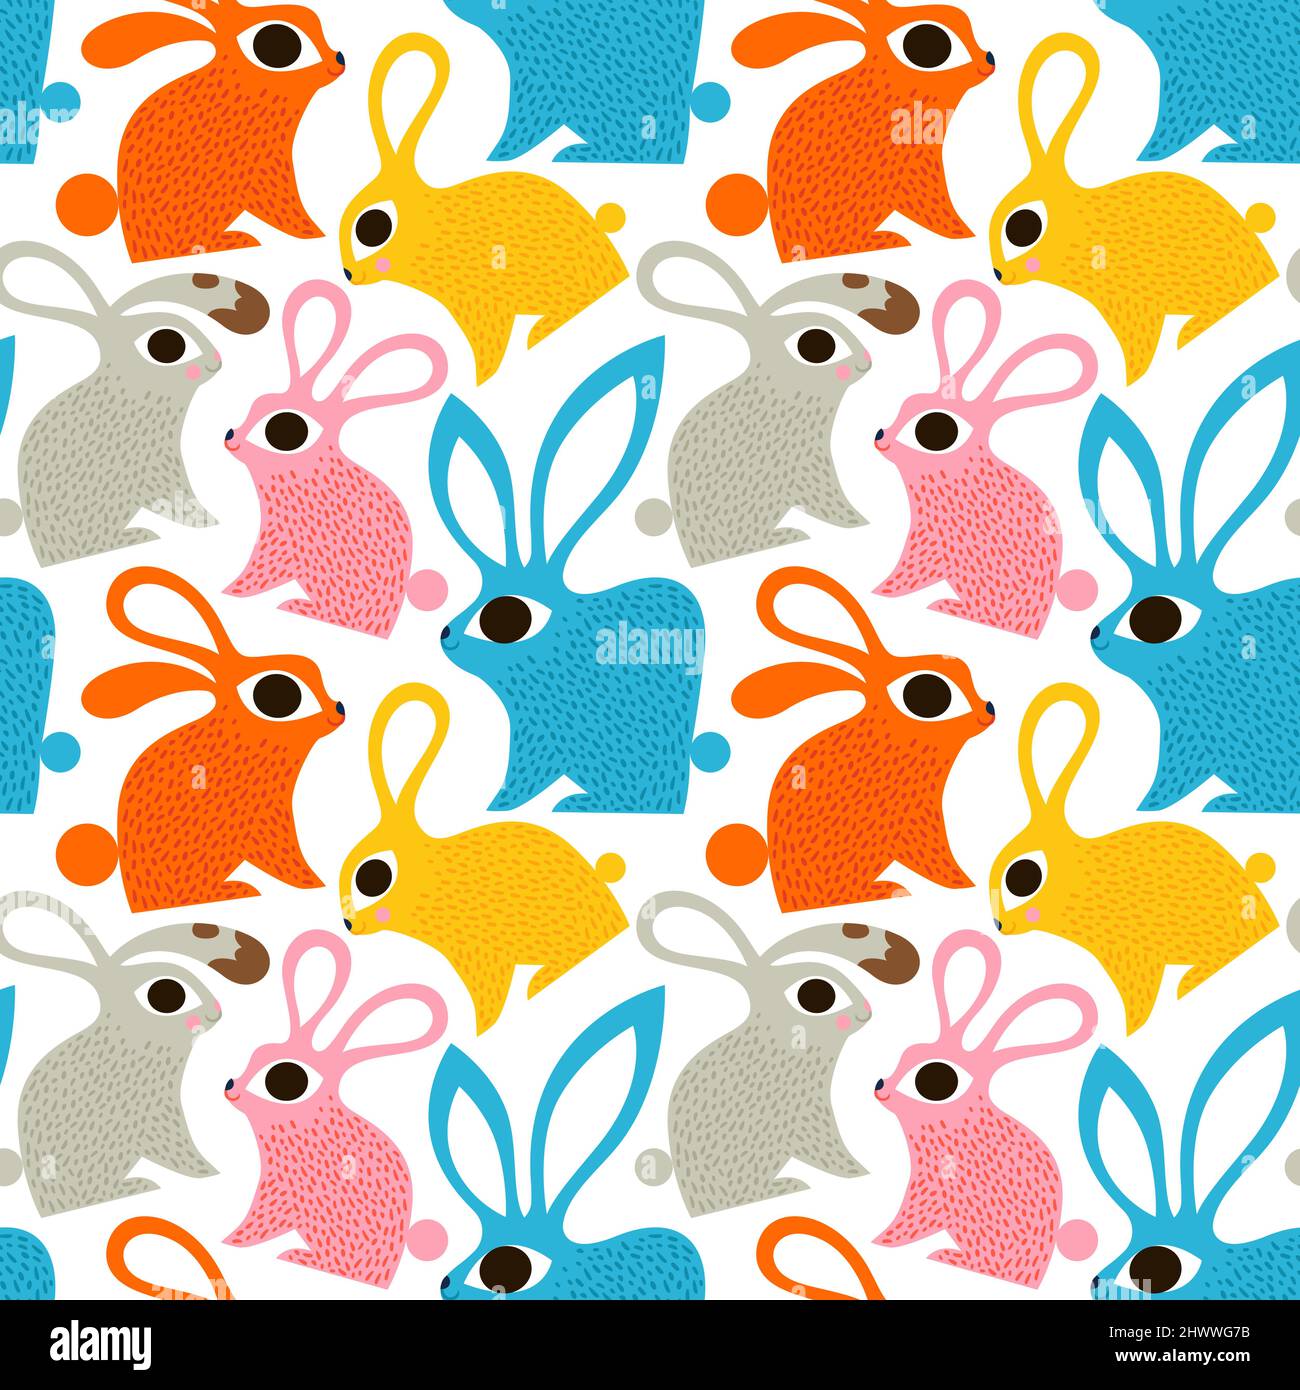 Easter rabbit seamless pattern illustration. Cute bunny animal background in vintage folk art style. Traditional scandinavian design for spring holida Stock Vector